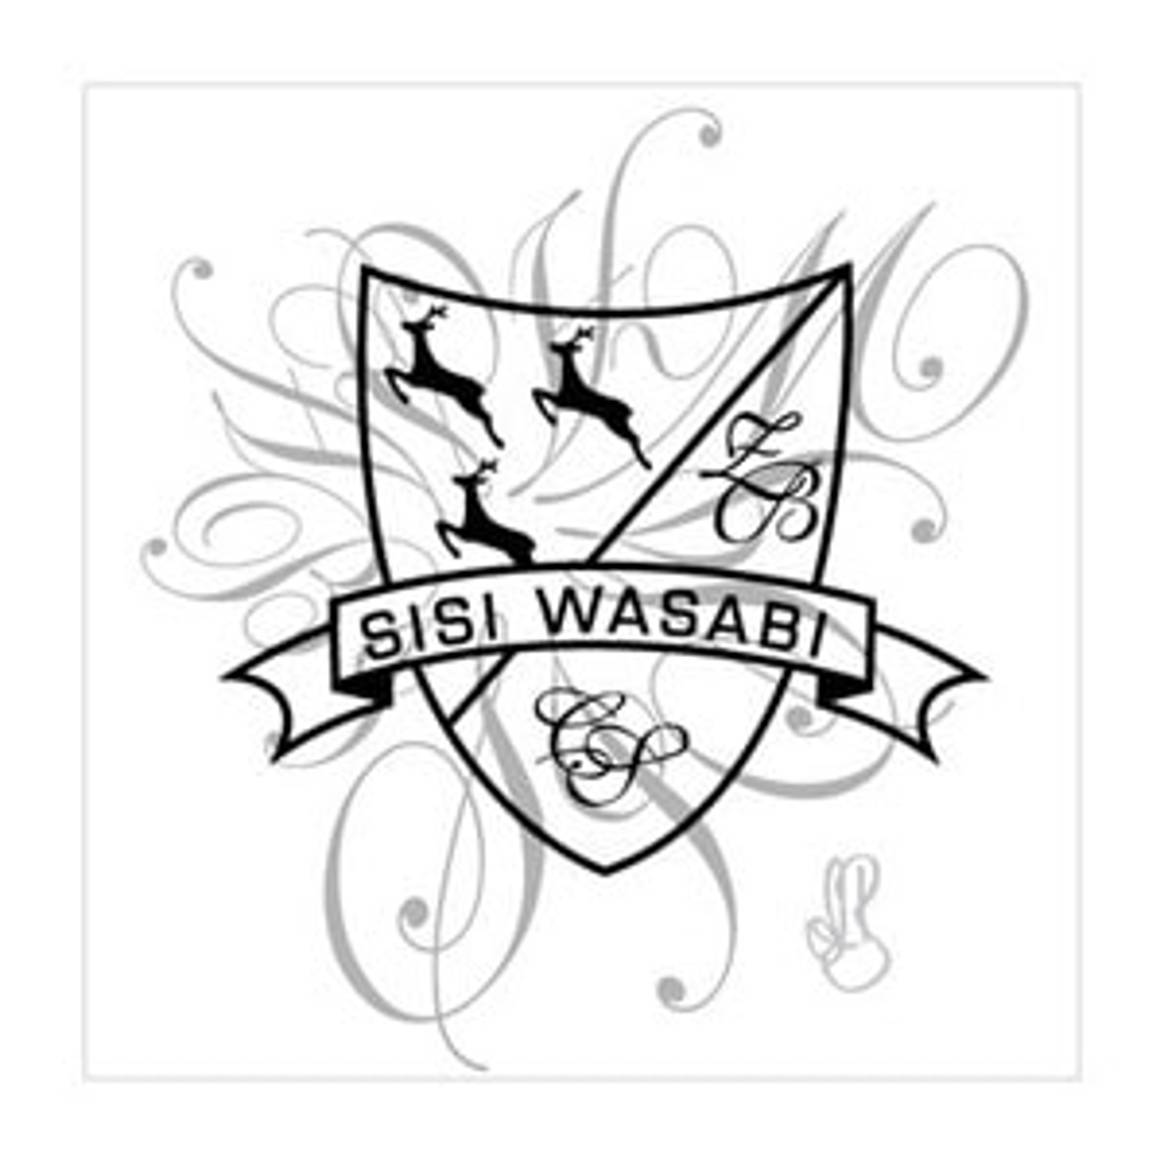 Sisi Wasabi eröffnet Modewoche in Taschkent